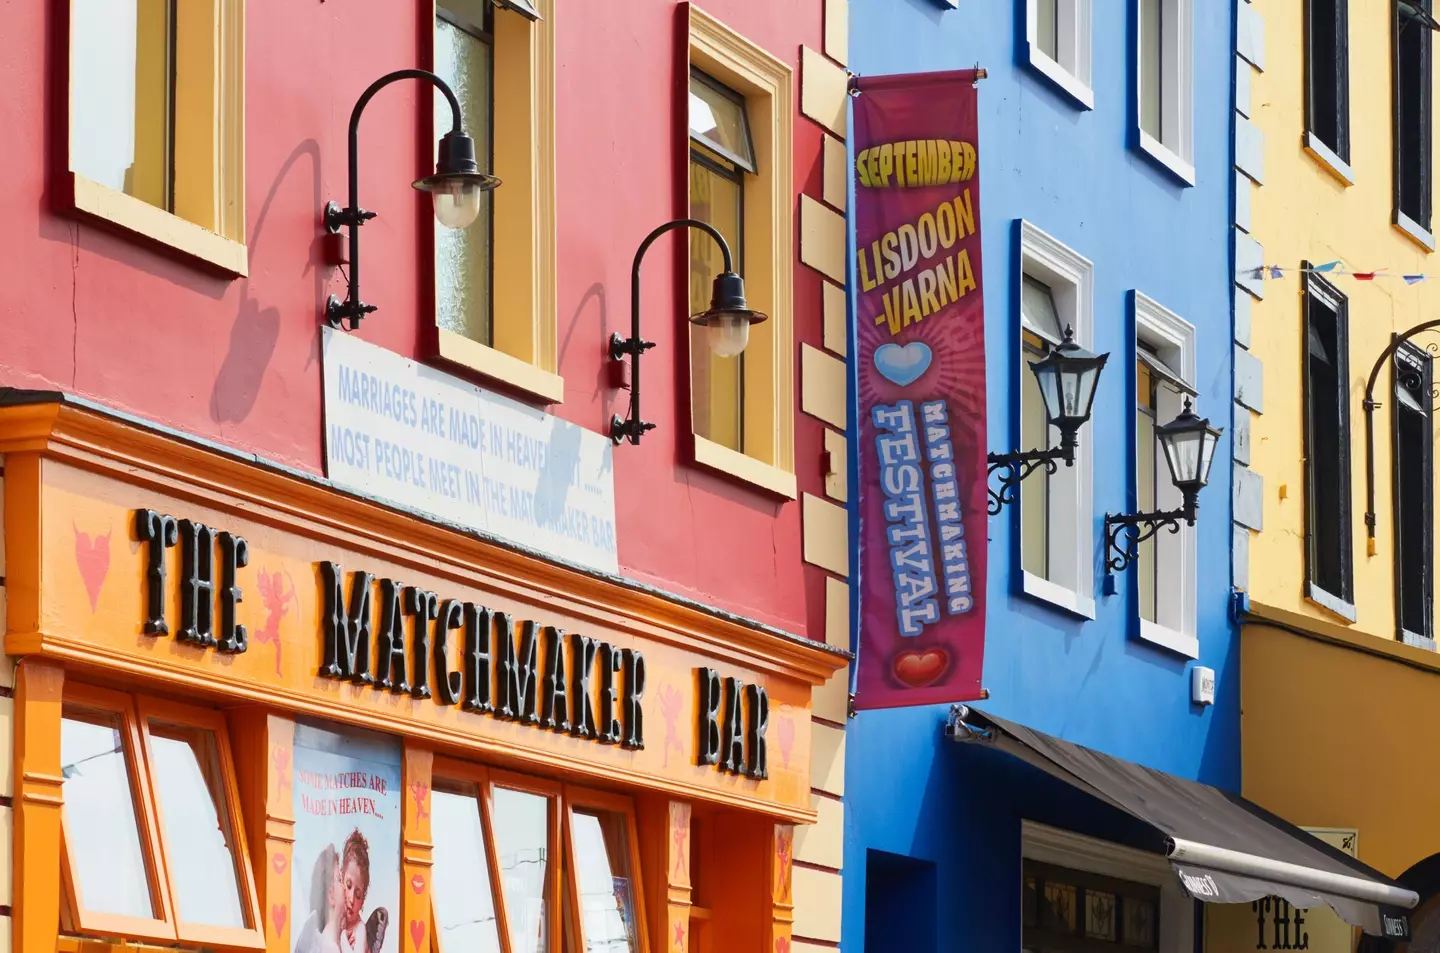 Lisdoonvarna Matchmaker Bar, County Clare, Ireland.